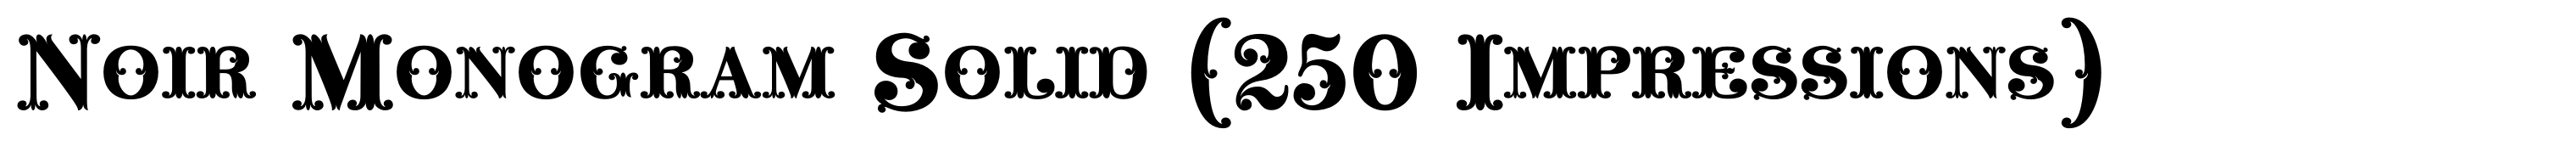 Noir Monogram Solid (250 Impressions)